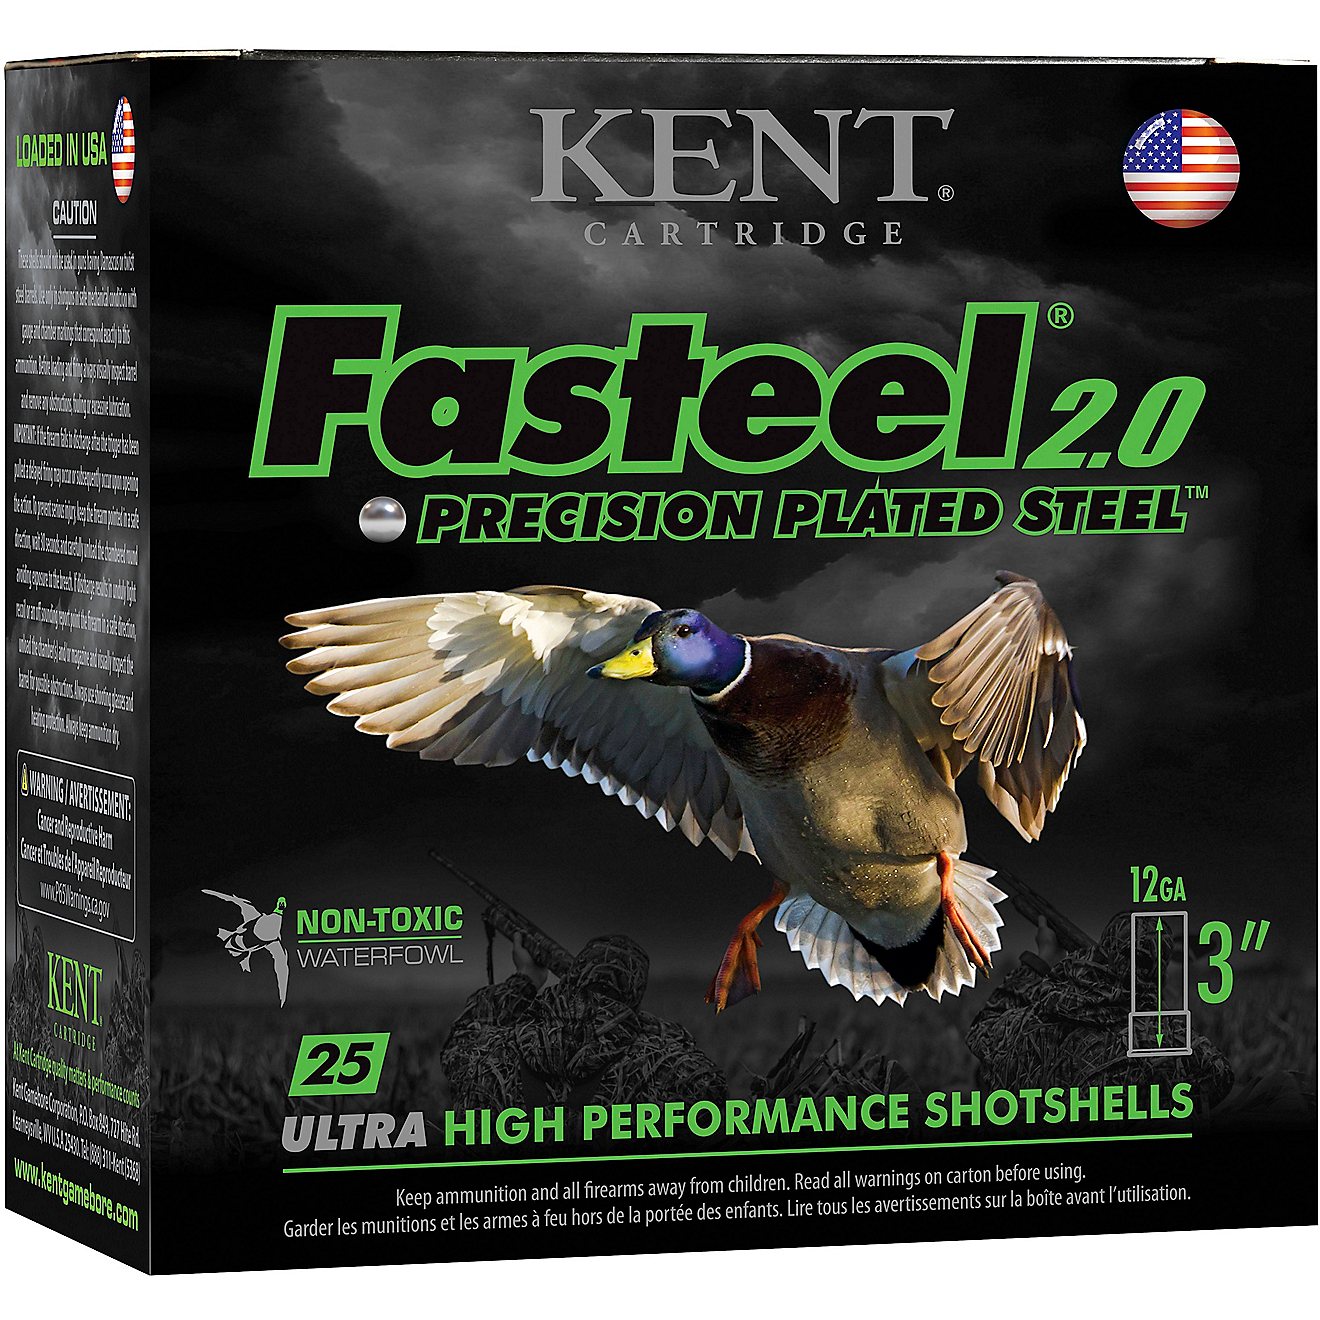 KENT Fasteel 2.0 Precision Plated Steel Waterfowl 12 Gauge Shotshells - 25 Rounds                                                - view number 1